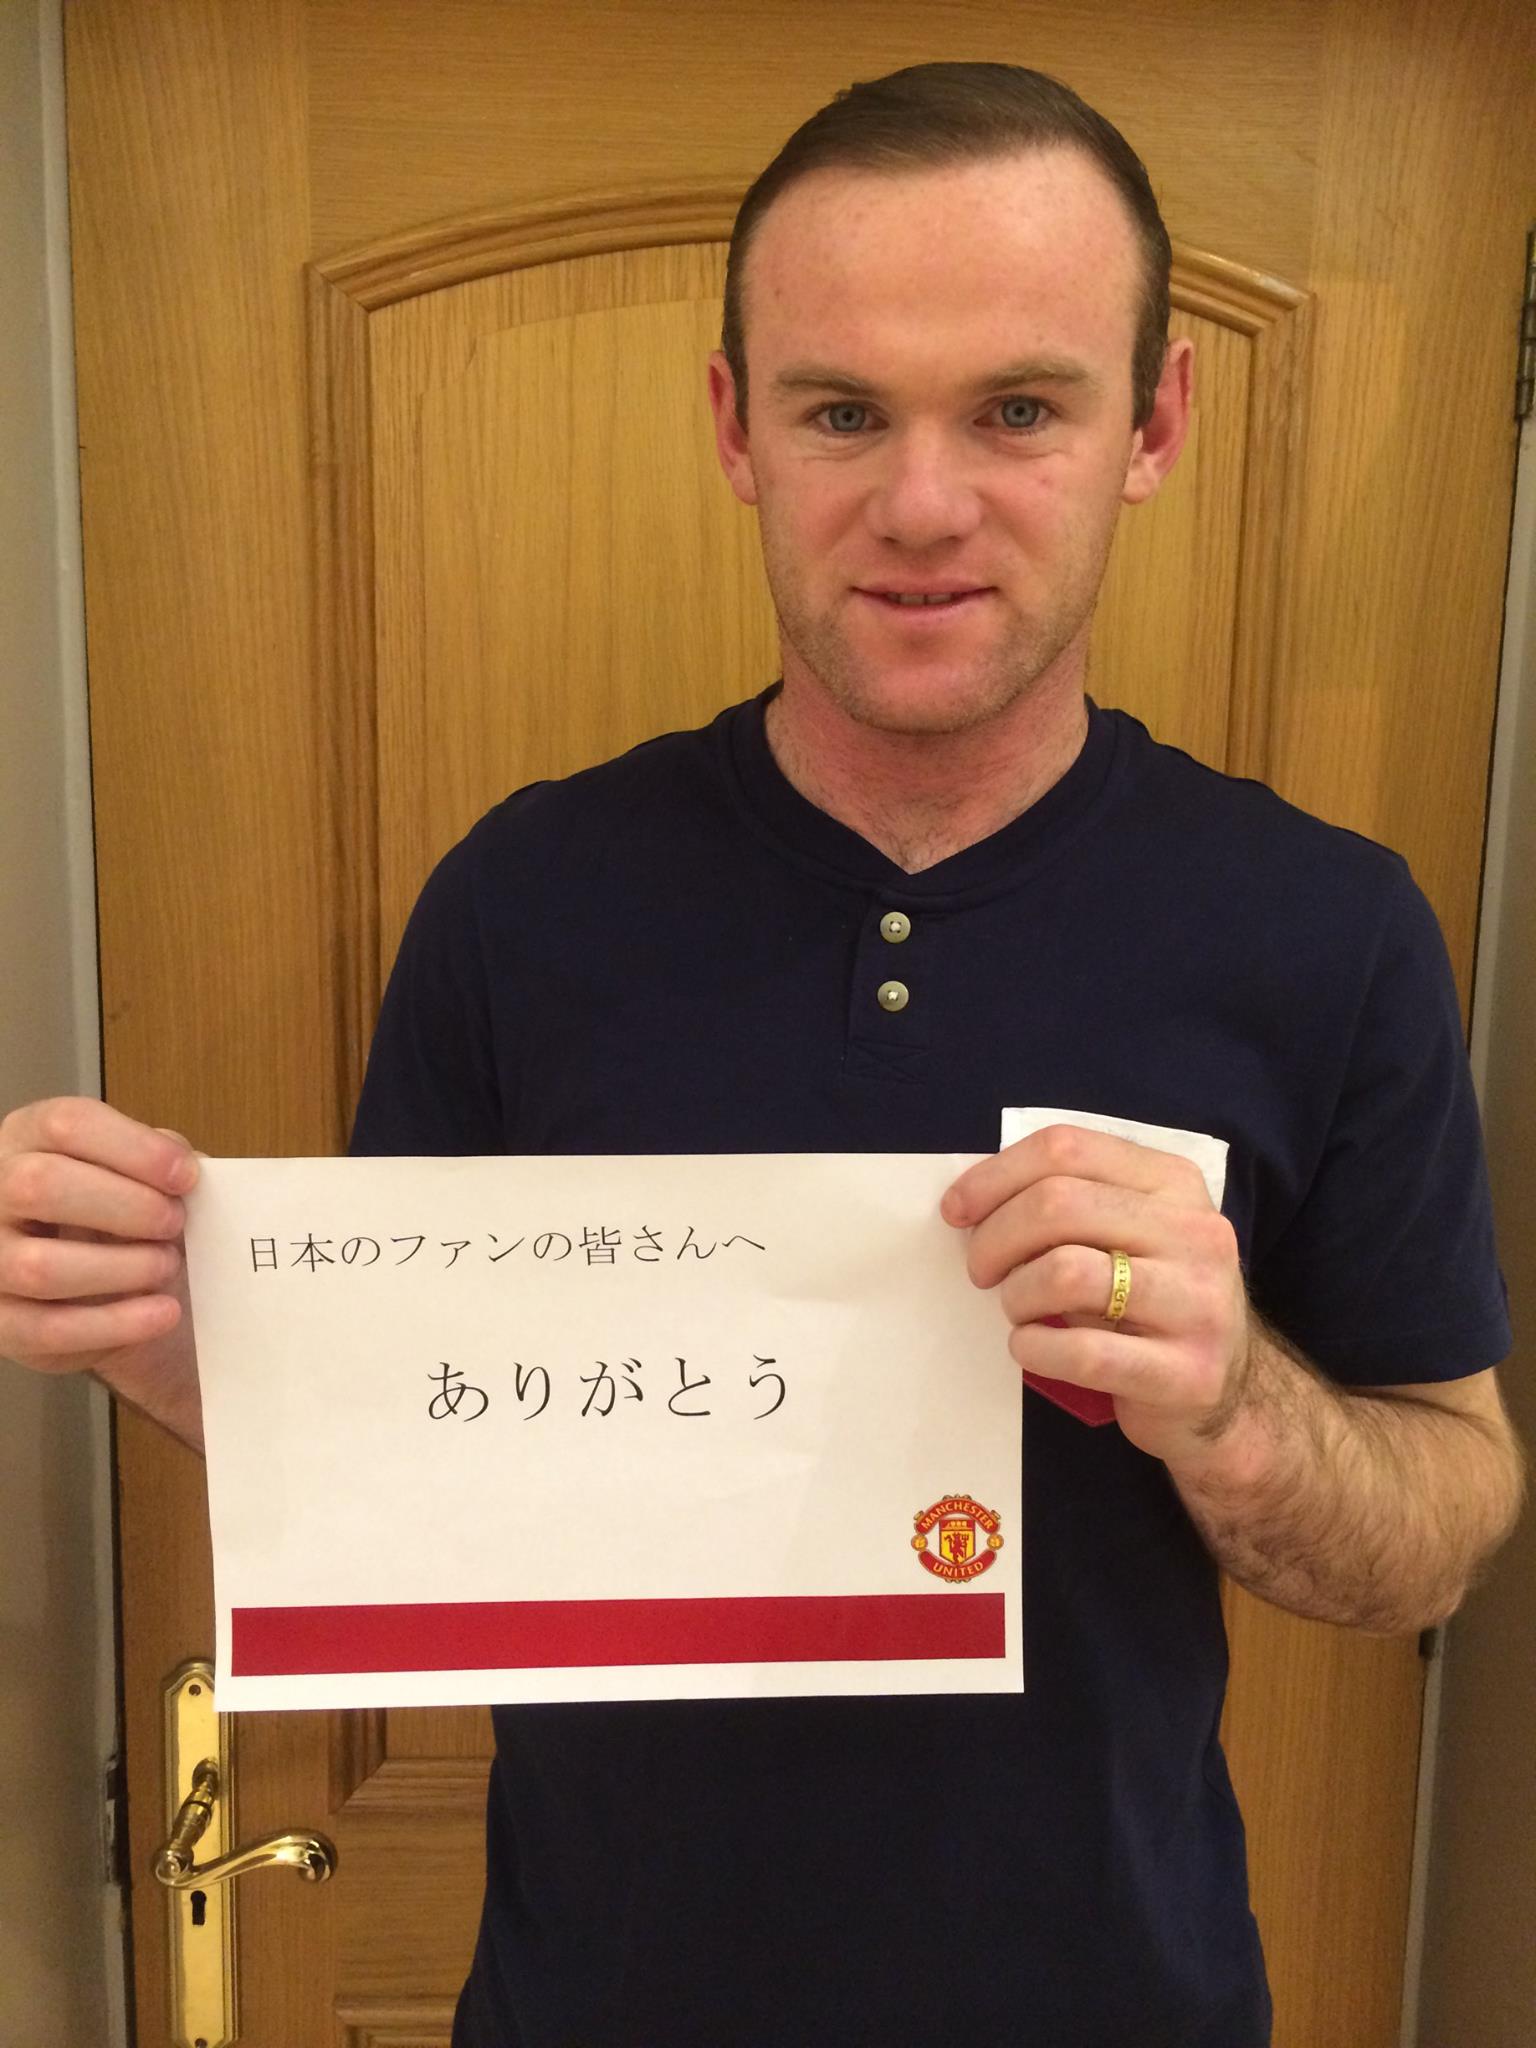 Wayne Rooney Japanese